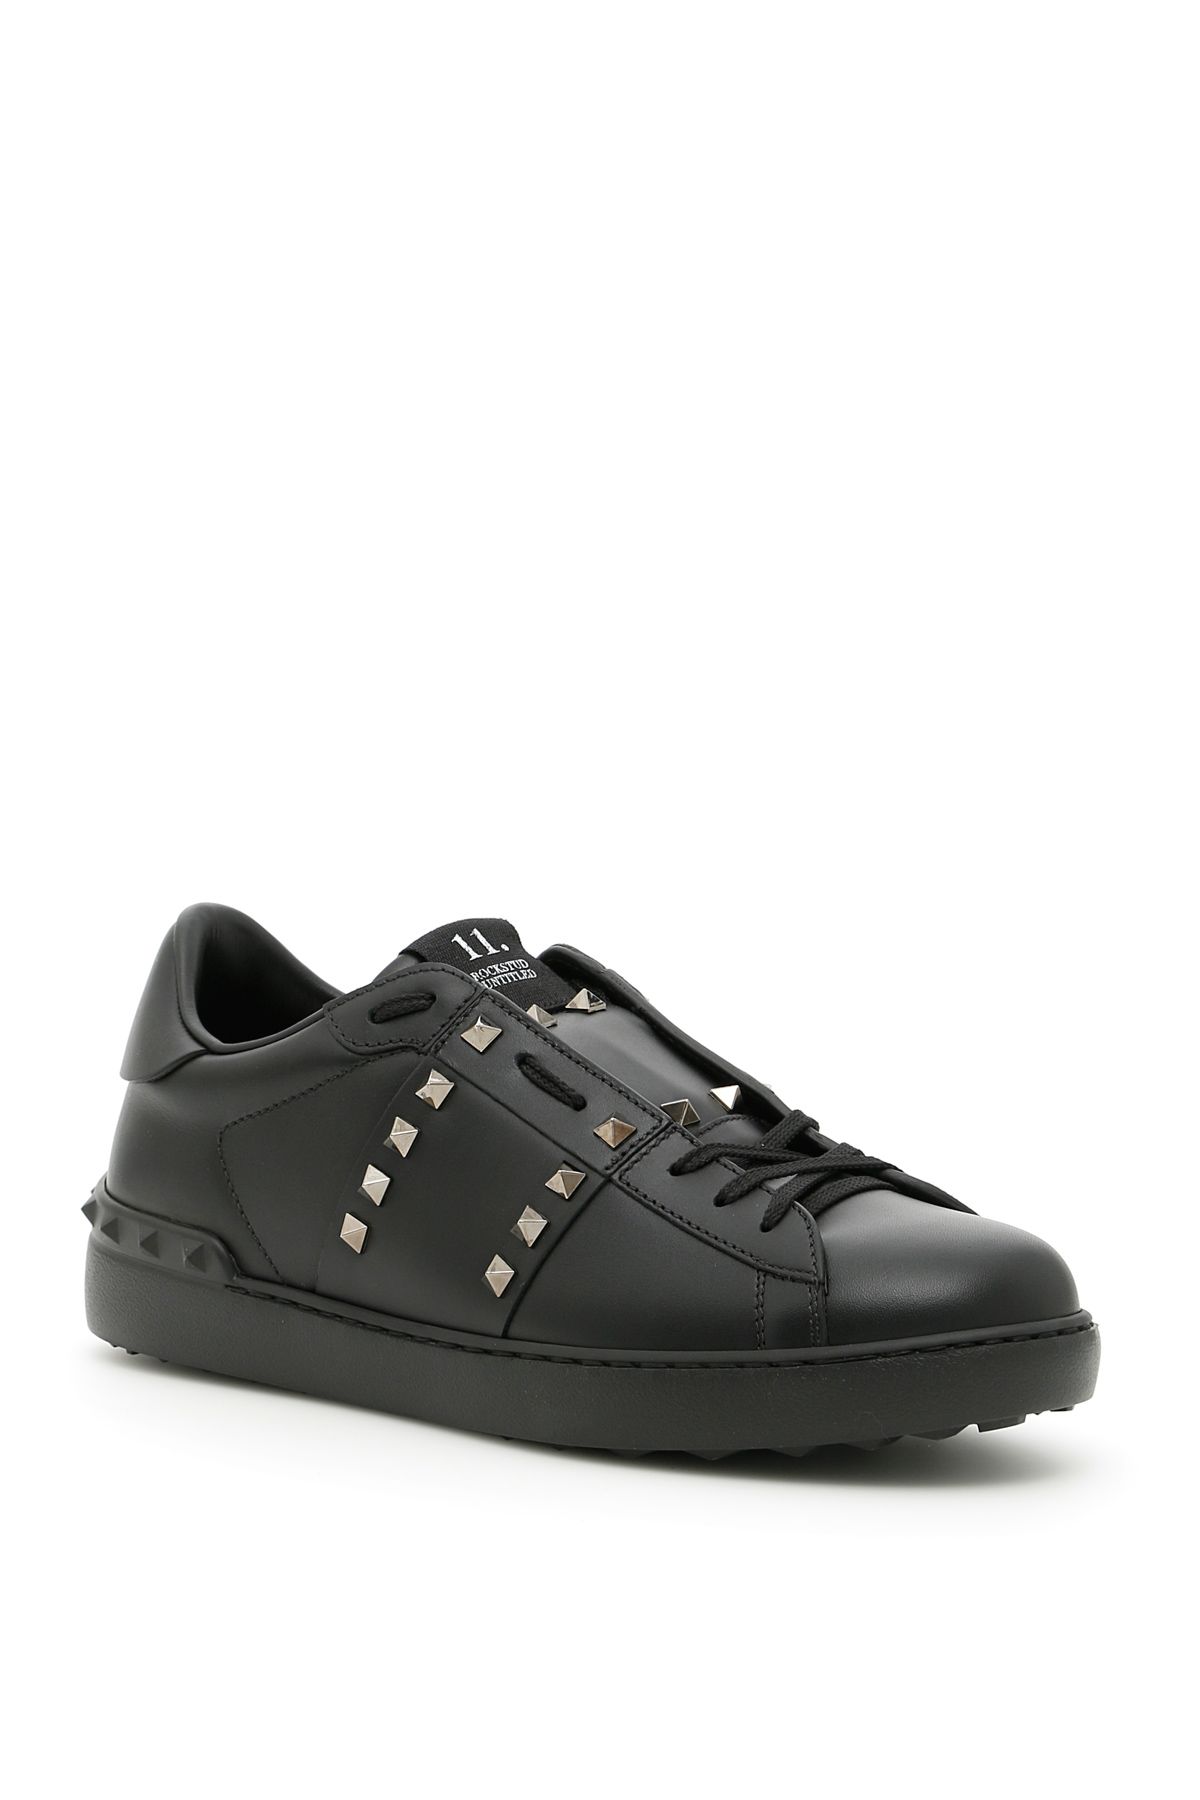 VALENTINO Rockstud Untitled Men'S Leather Low-Top Sneaker, Black | ModeSens